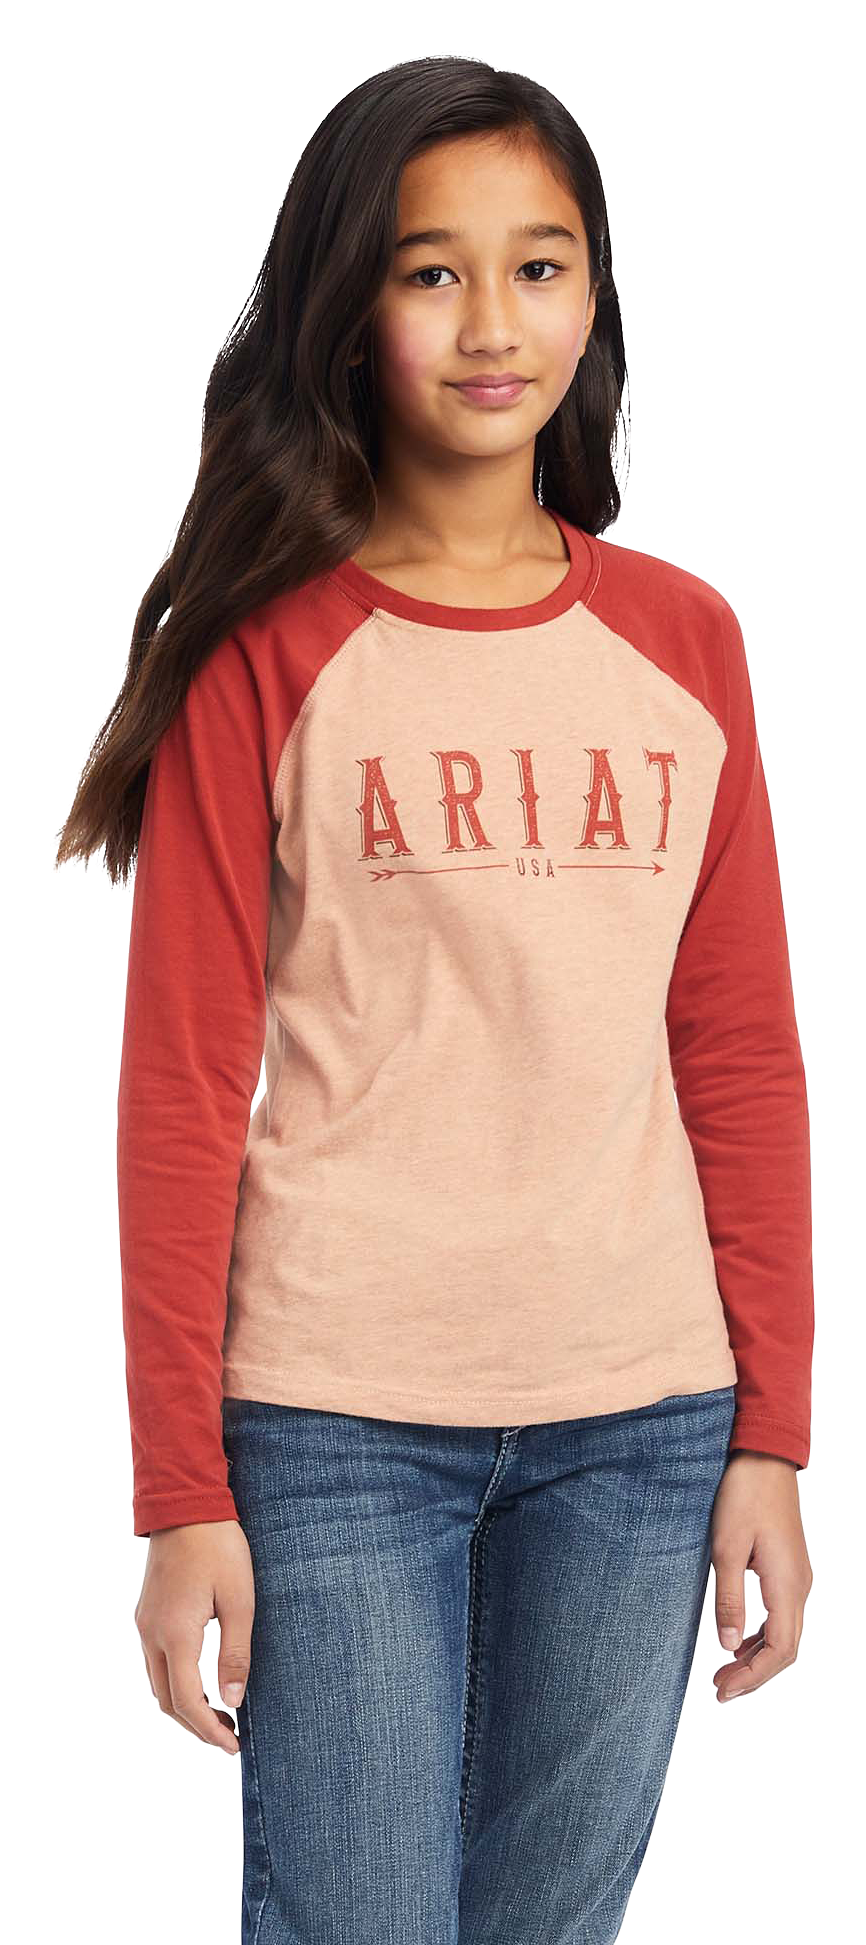 Ariat R.E.A.L. Arrow Long-Sleeve T-Shirt for Girls - Palm Heather - S